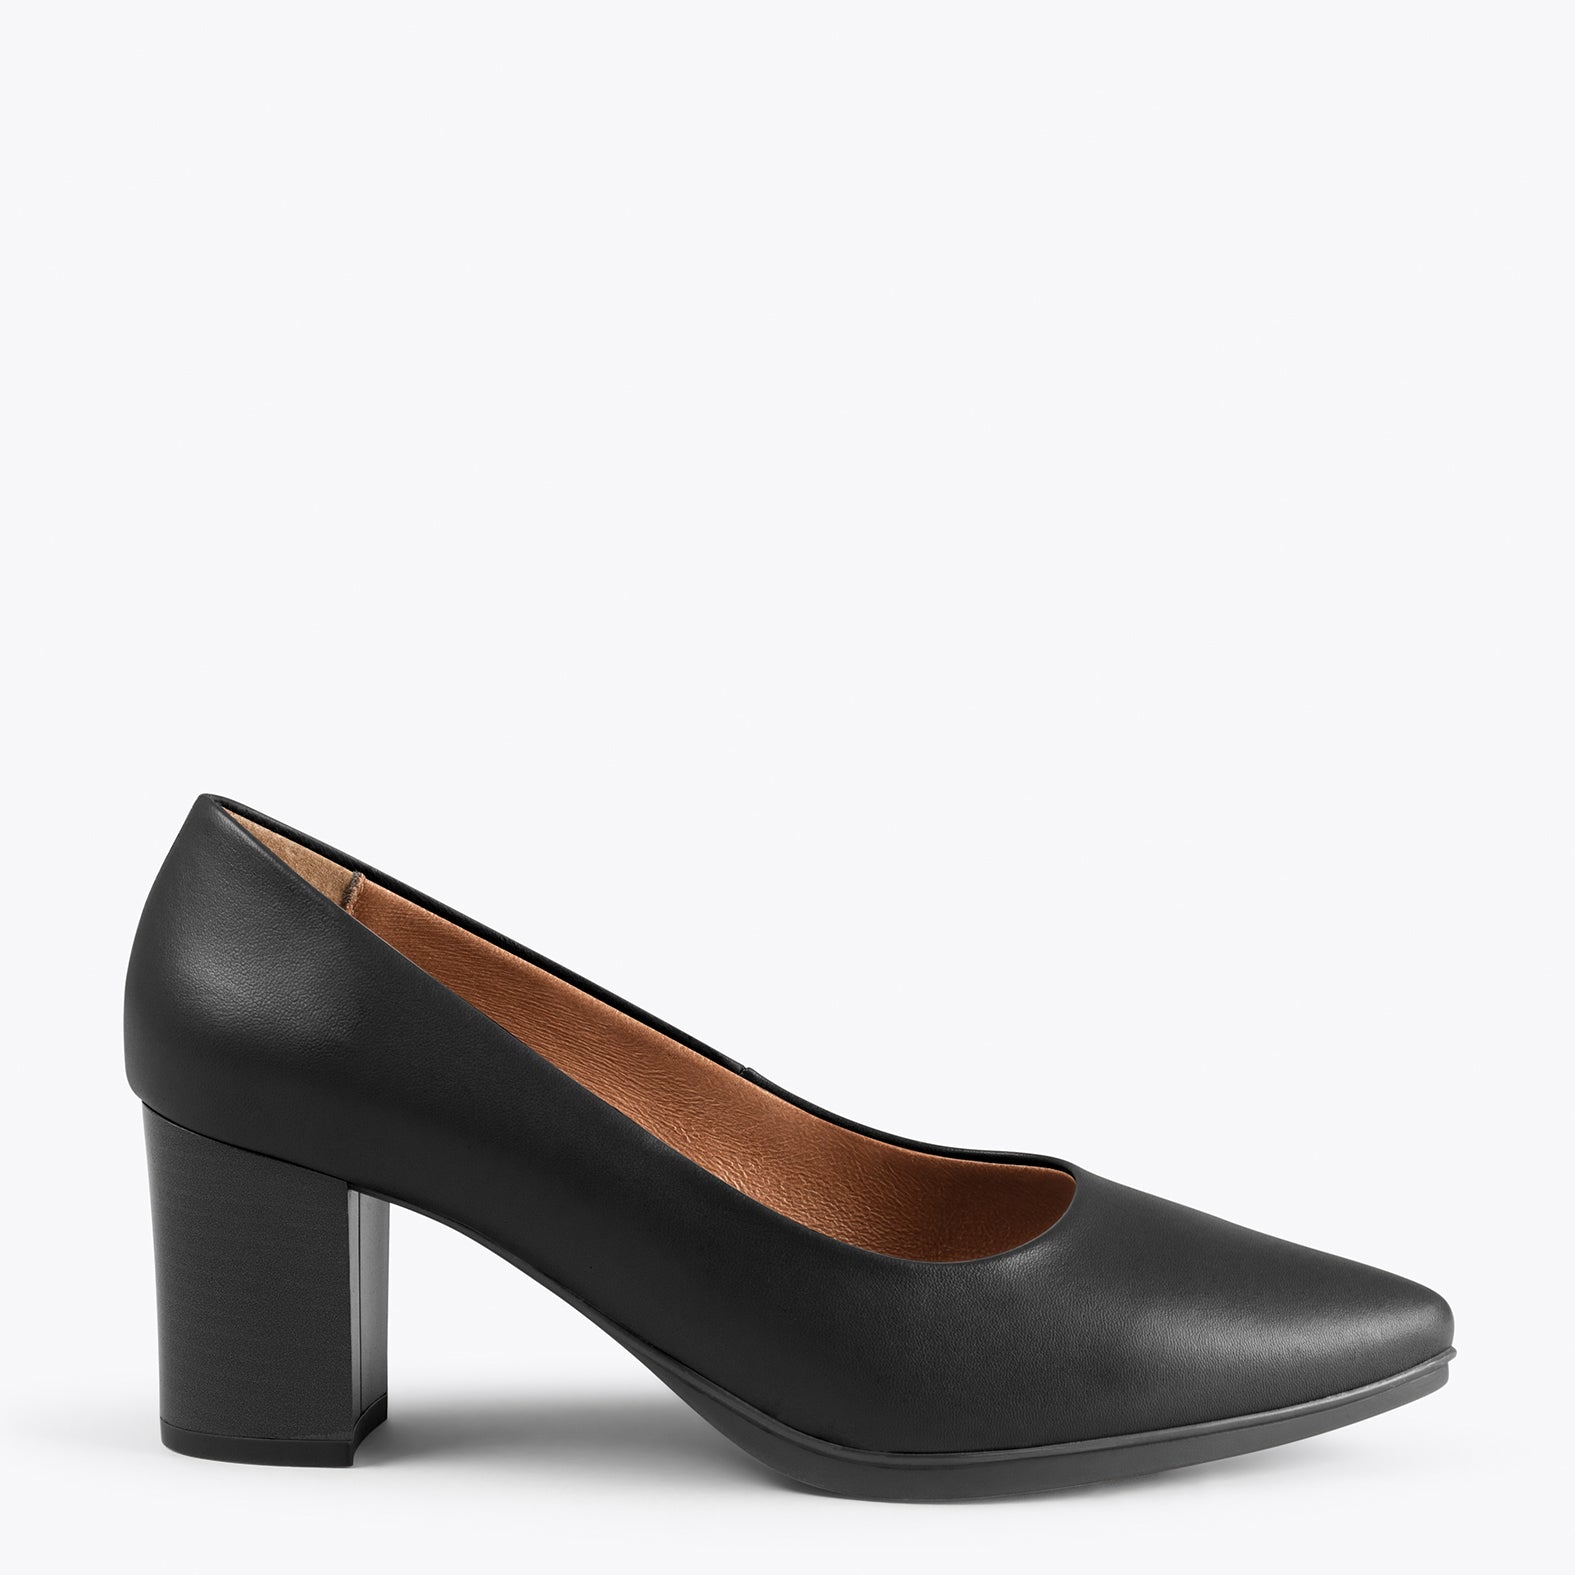 URBAN S SALON – BLACK nappa leather mid heels